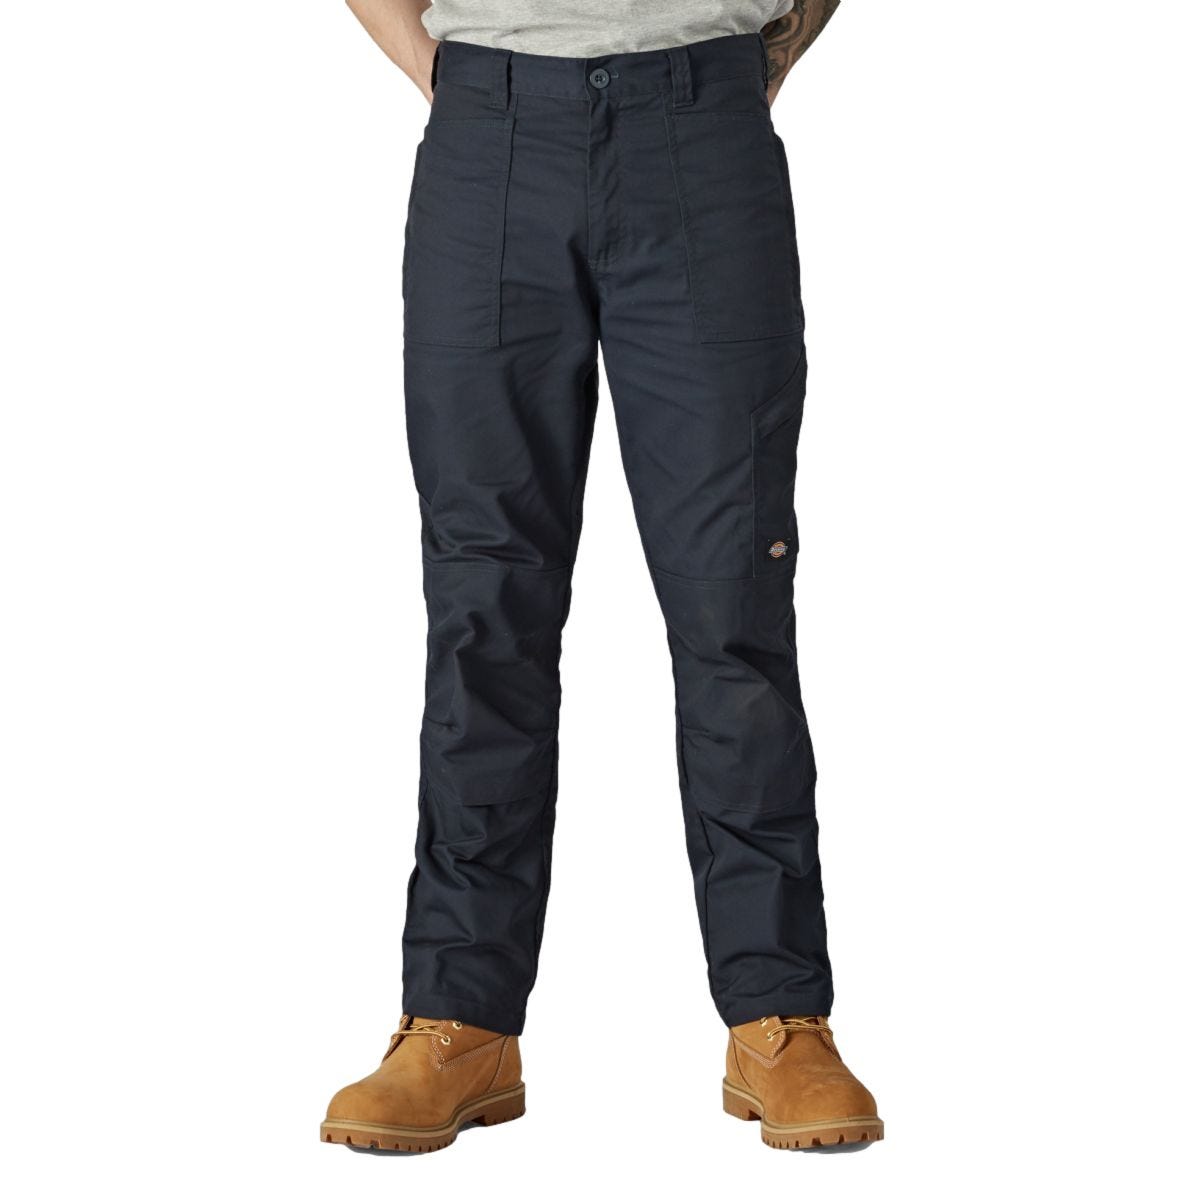 Pantalon de travail Action Flex bleu marine - Dickies - Taille 44 0